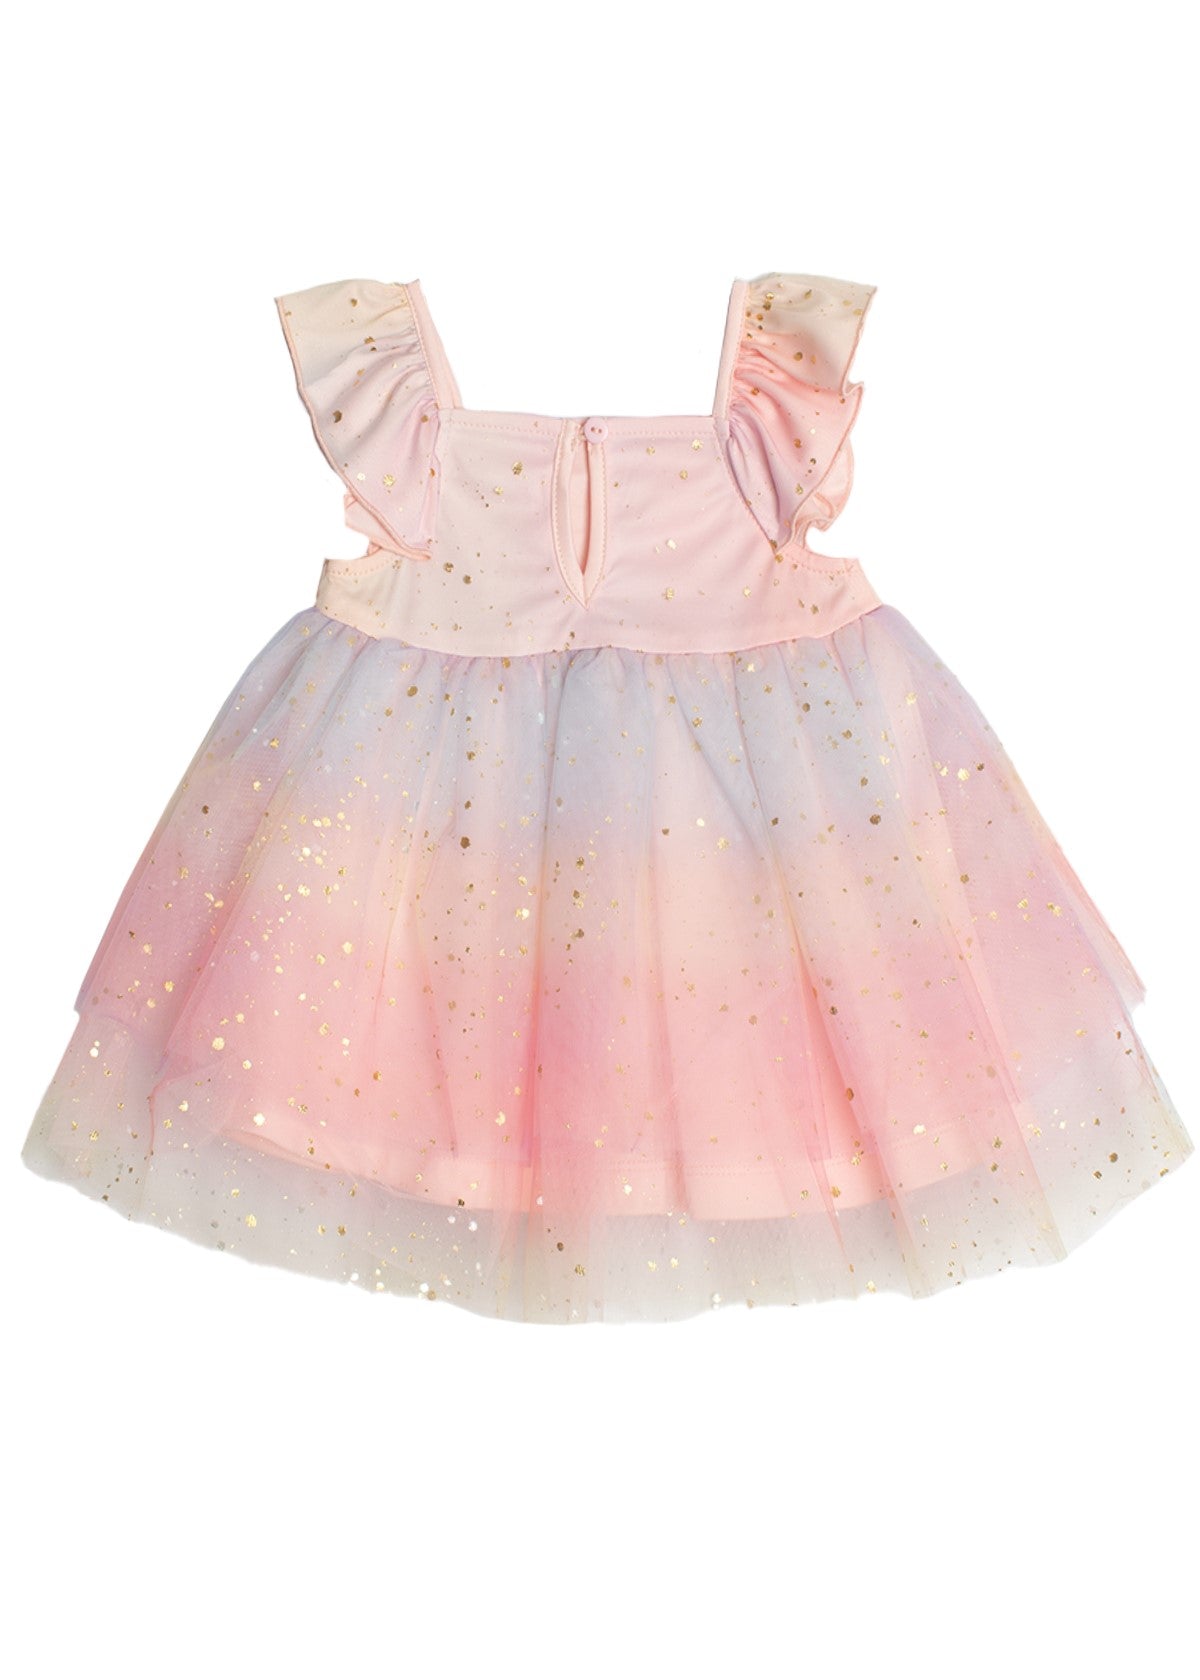 Isobella & Chloe Rainbow Delight Dress - Pink